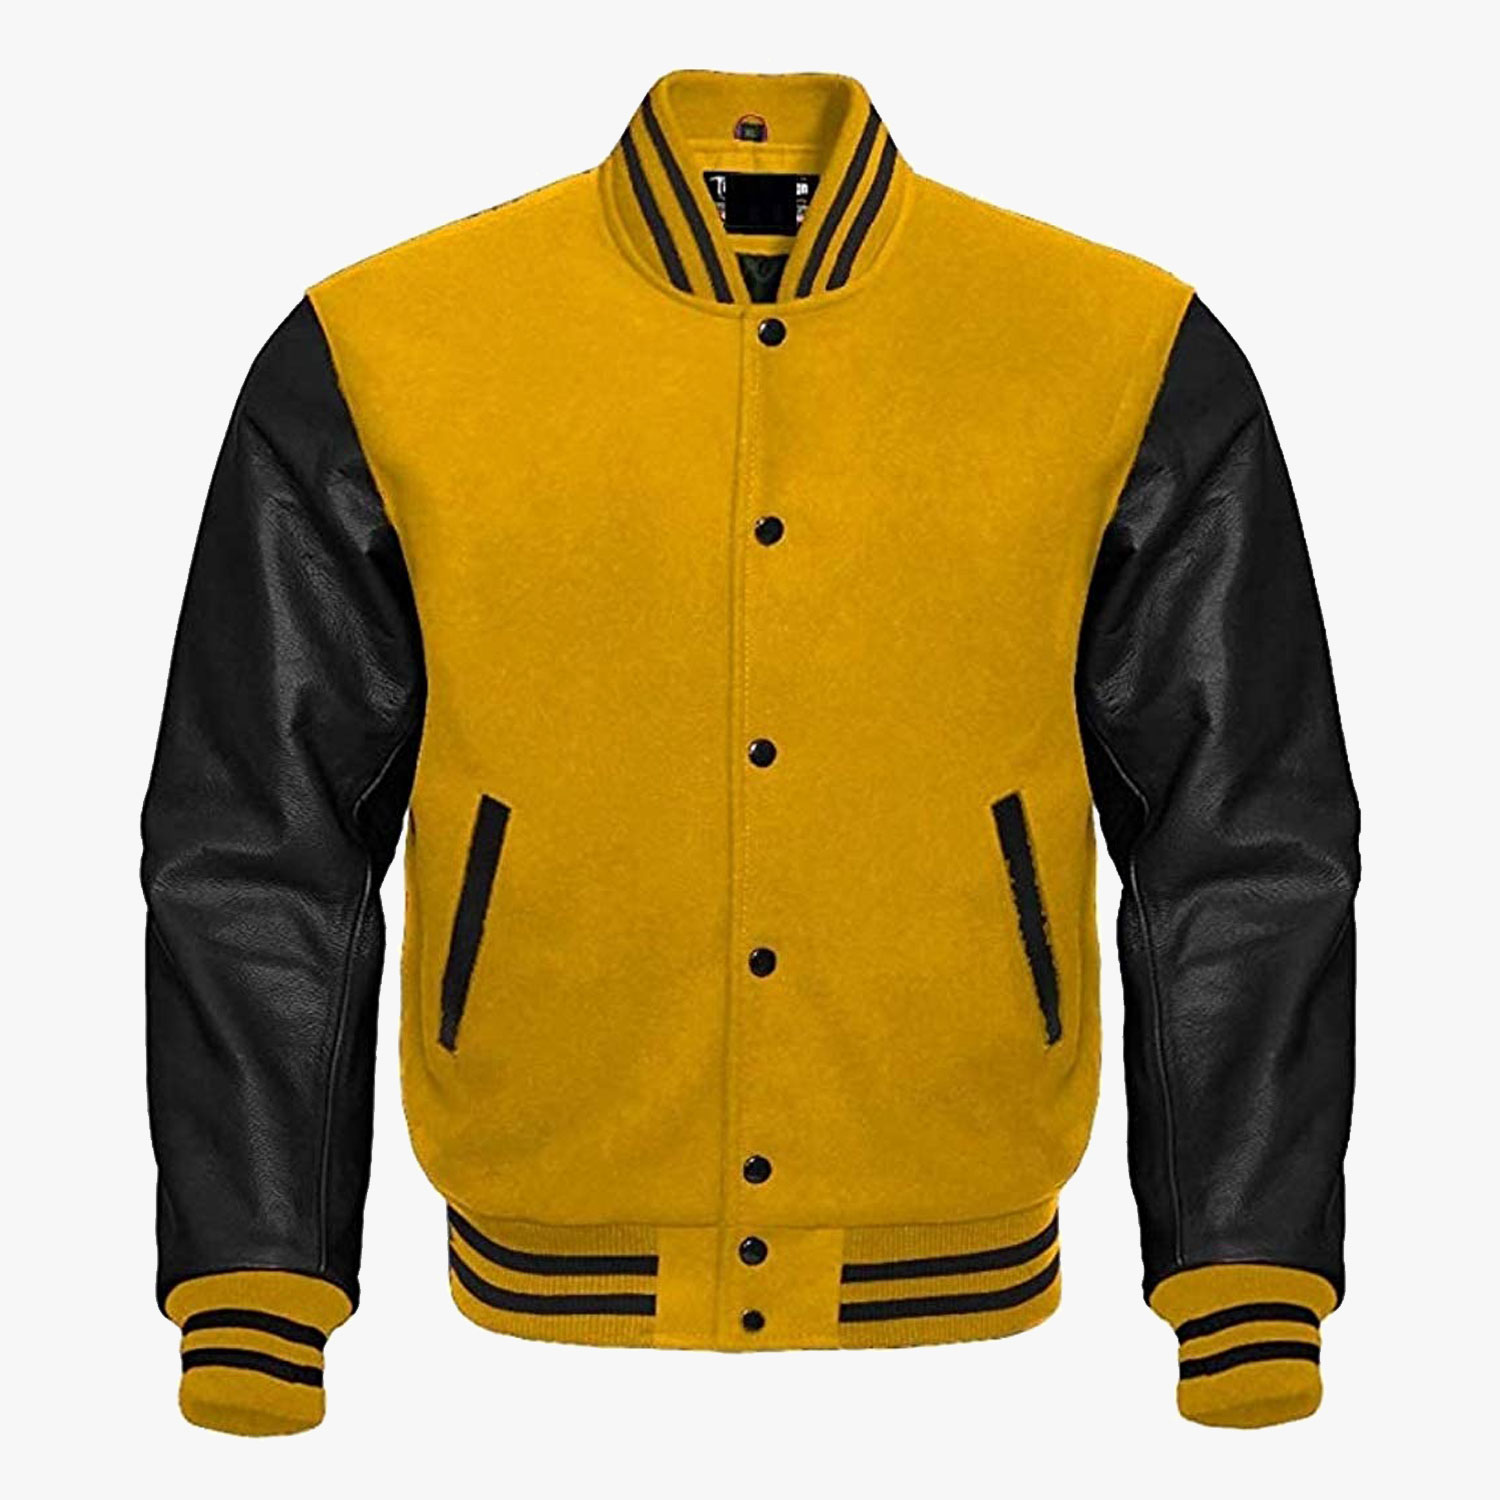 Custom Varsity Jacket